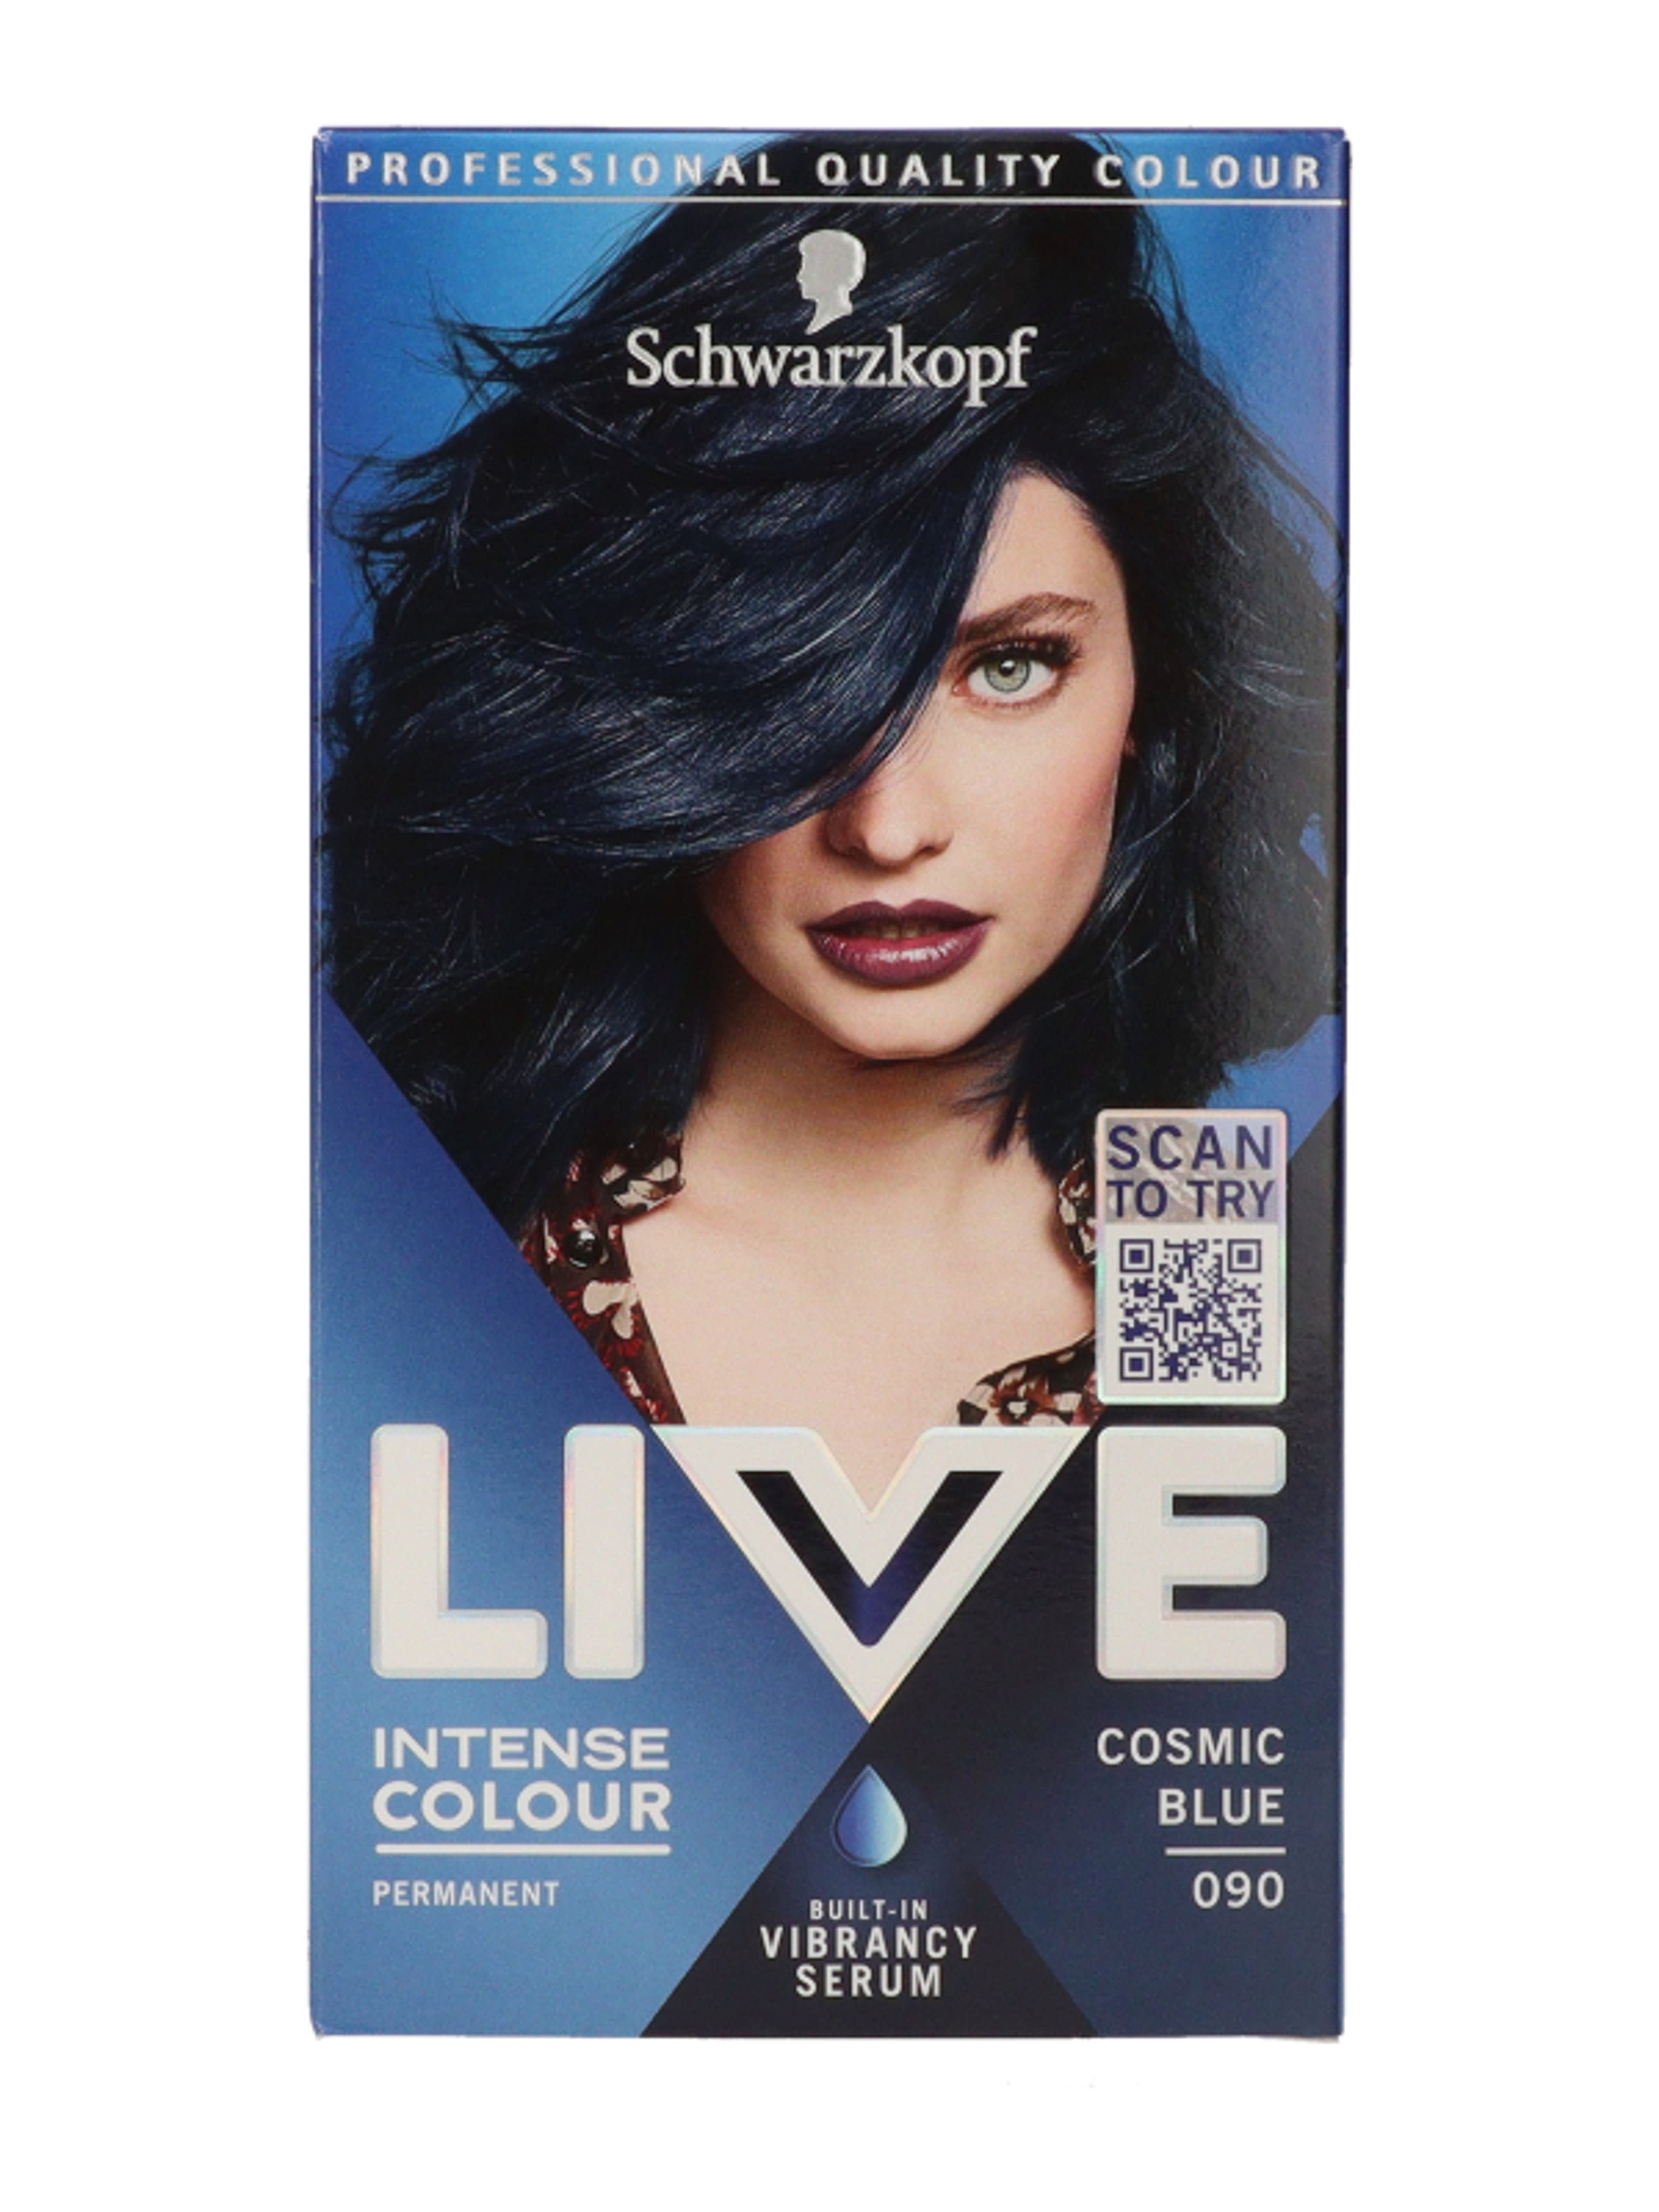 Schwarzkopf Color Live hajfesték 090 kozmikus kék - 1 db-3